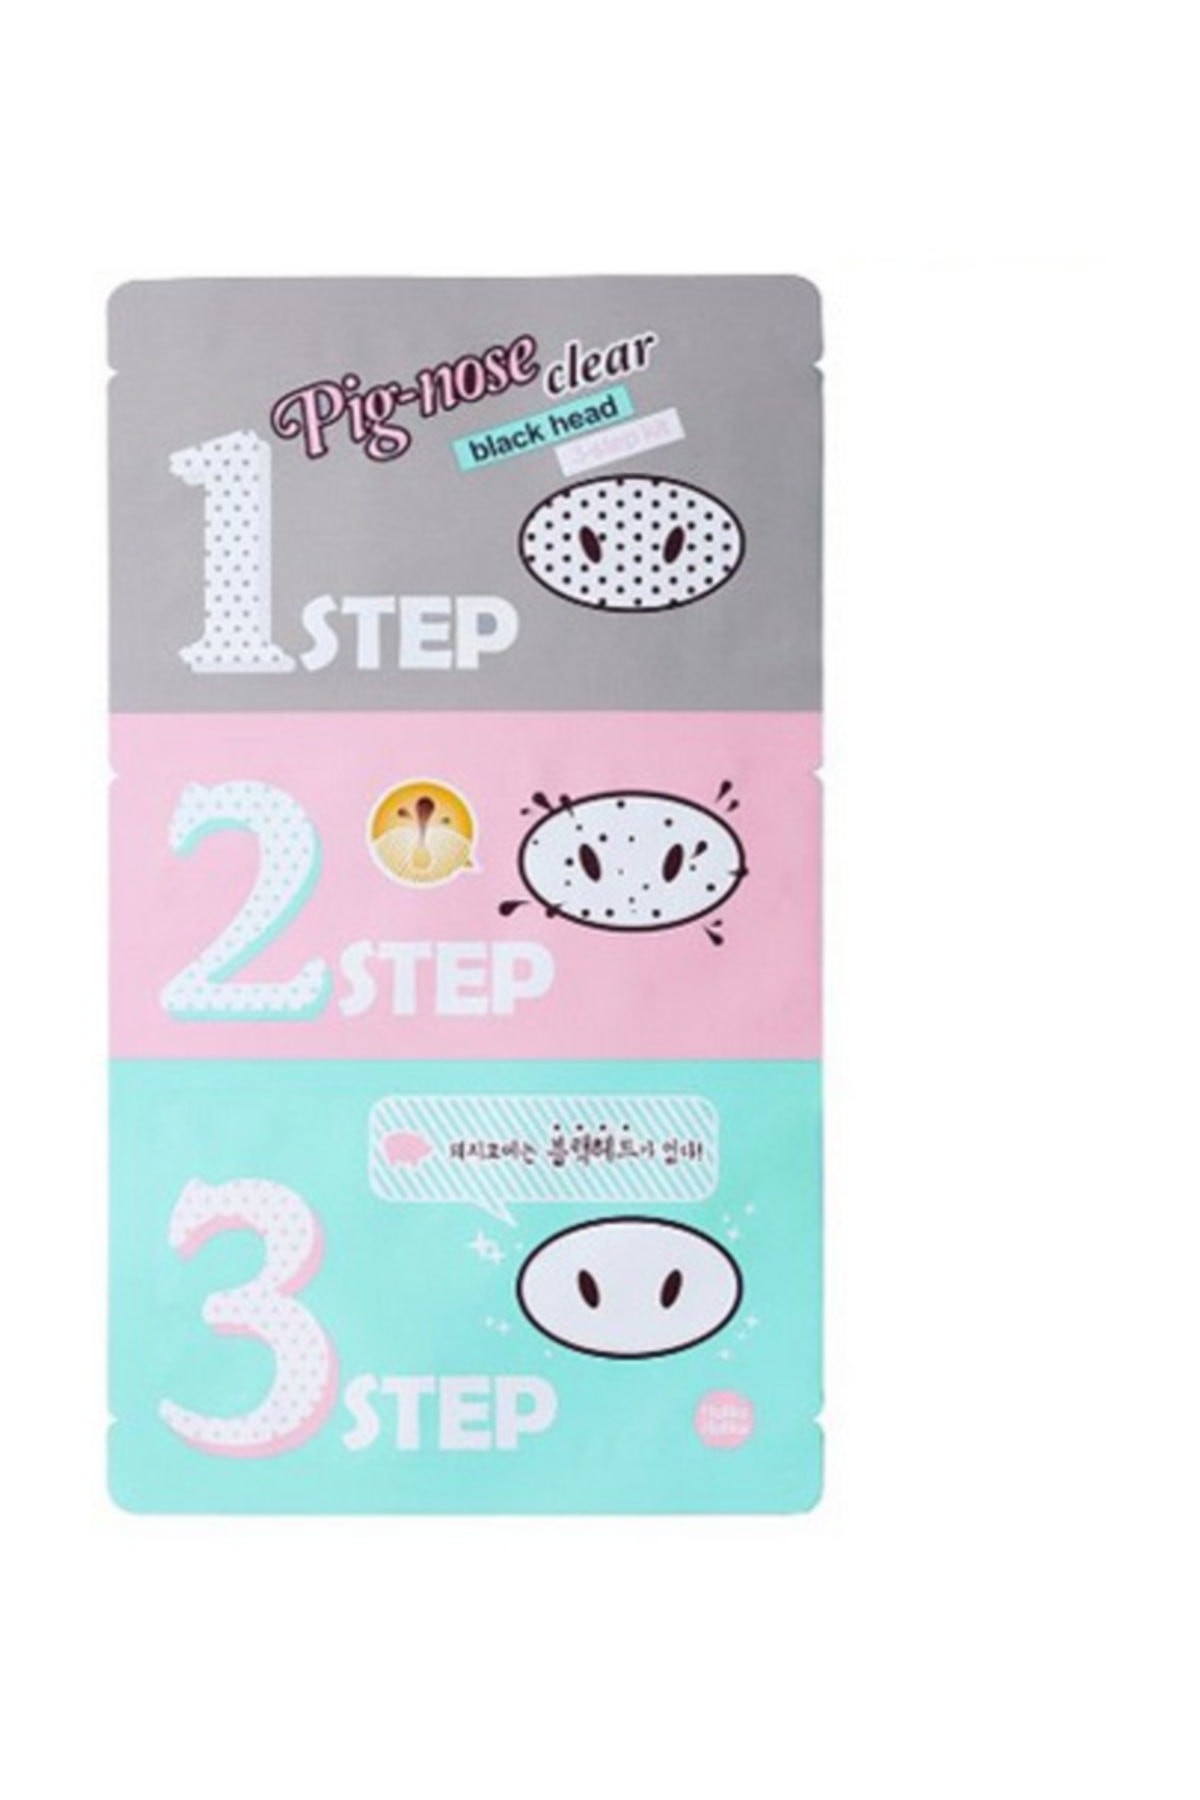 Pig Clear Black Head 3-step Kit